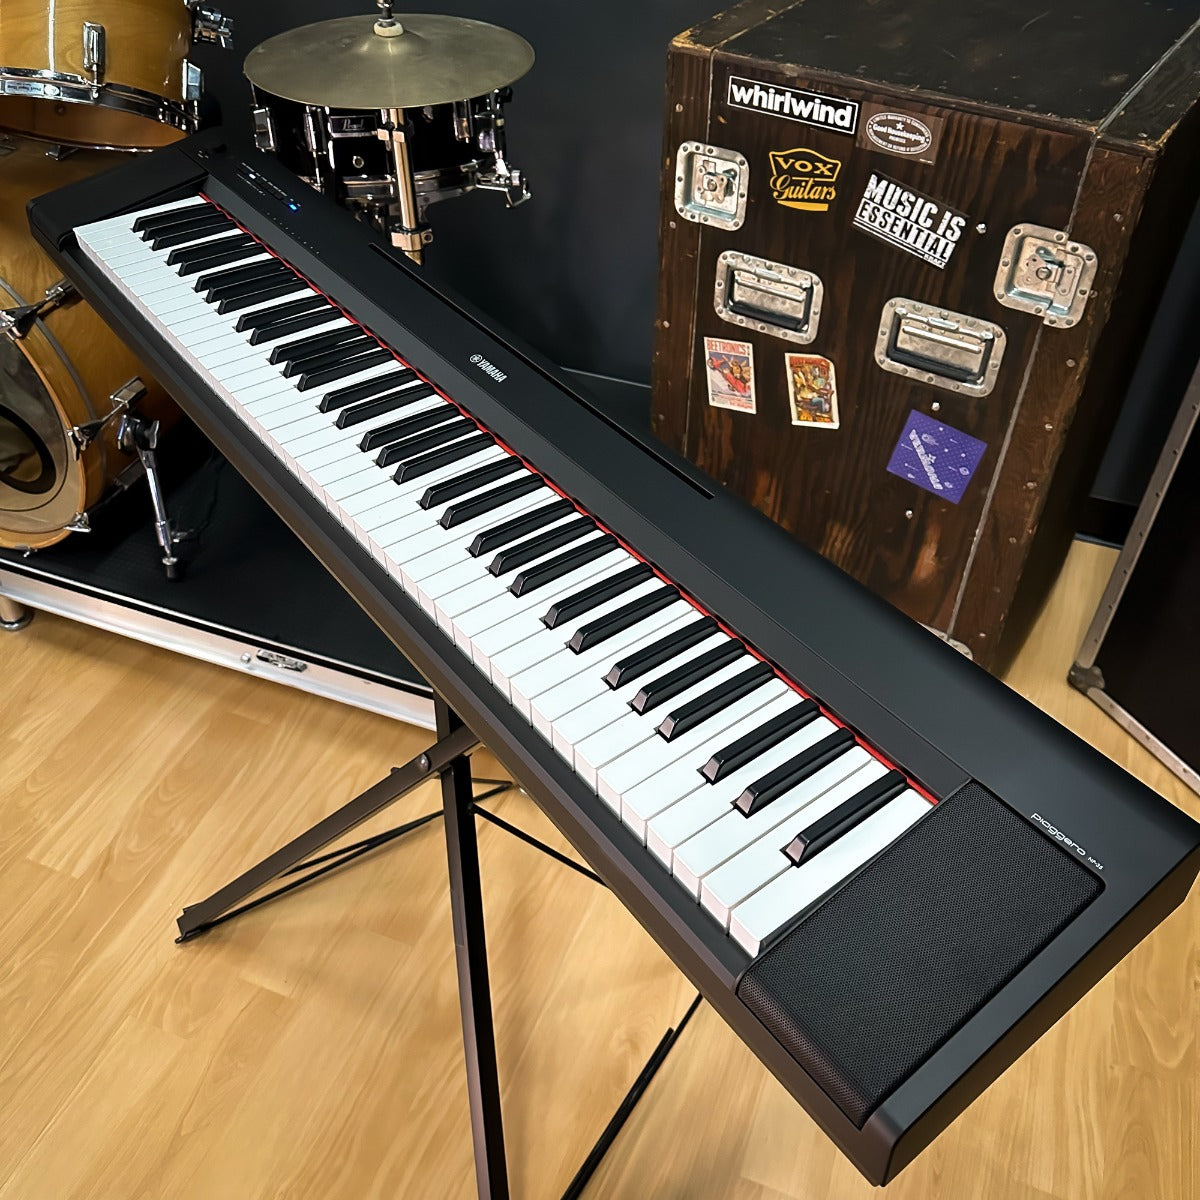 Yamaha Piaggero NP-35 76-Key Portable Keyboard - Black – Kraft Music